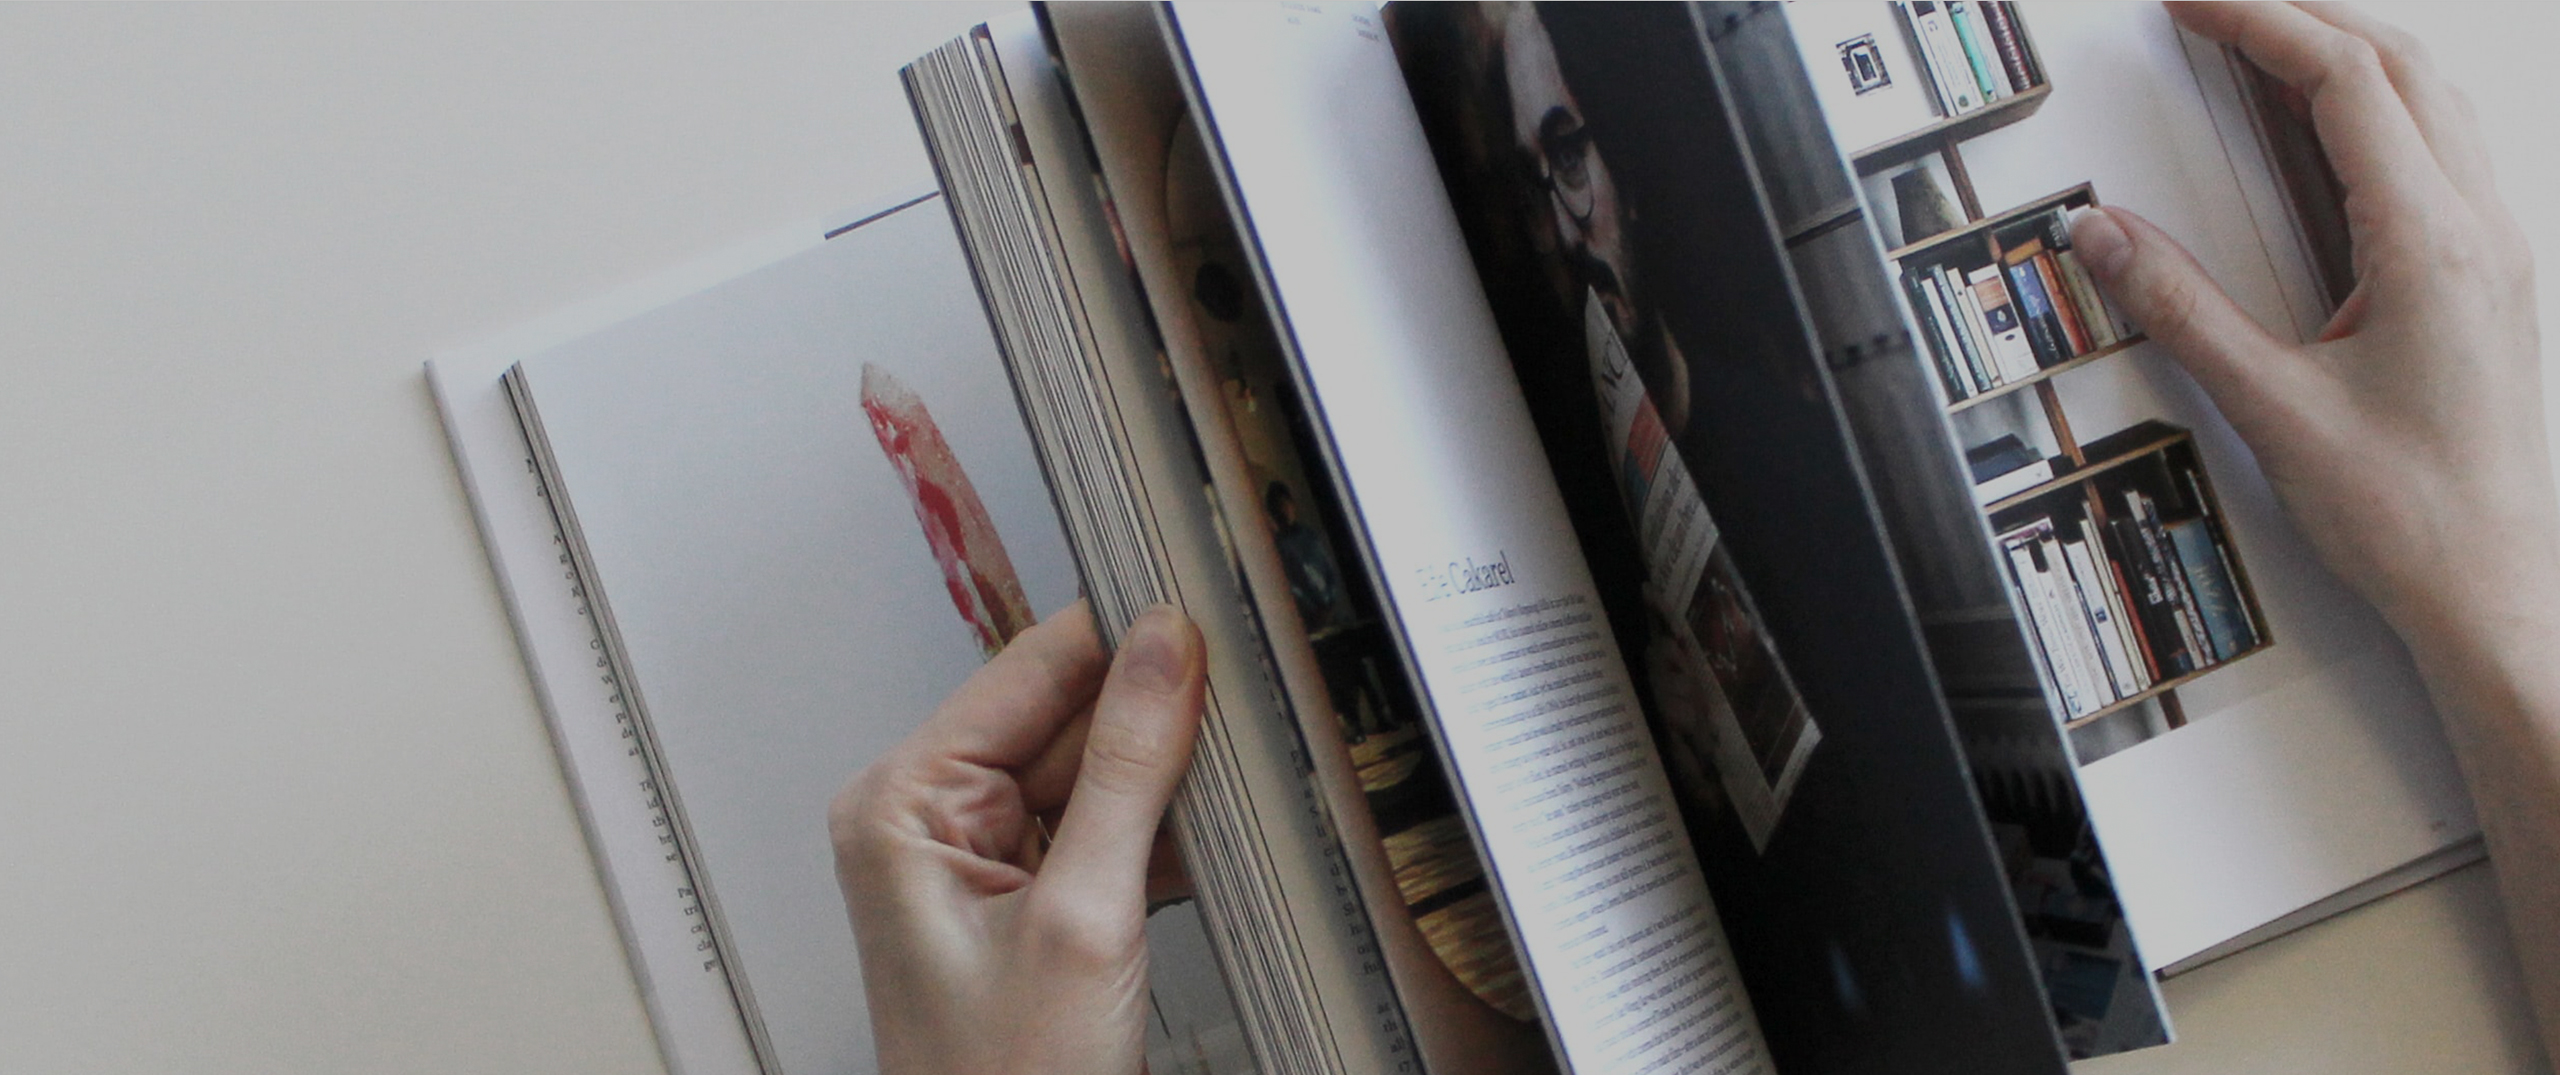 Hands leafing through a magazine